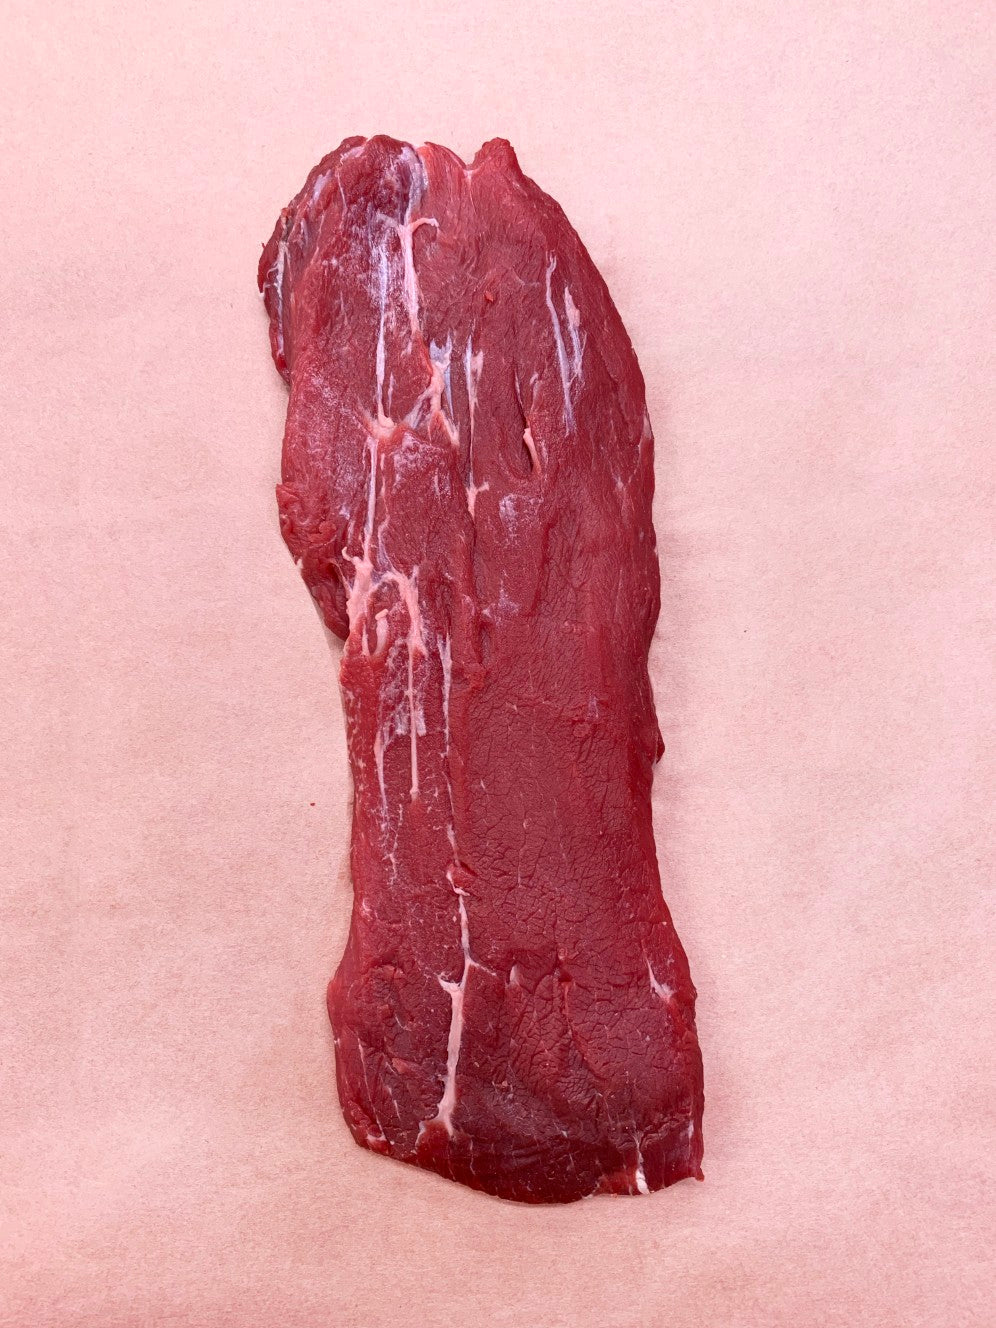 fresh (un-aged) steak, by the 200g